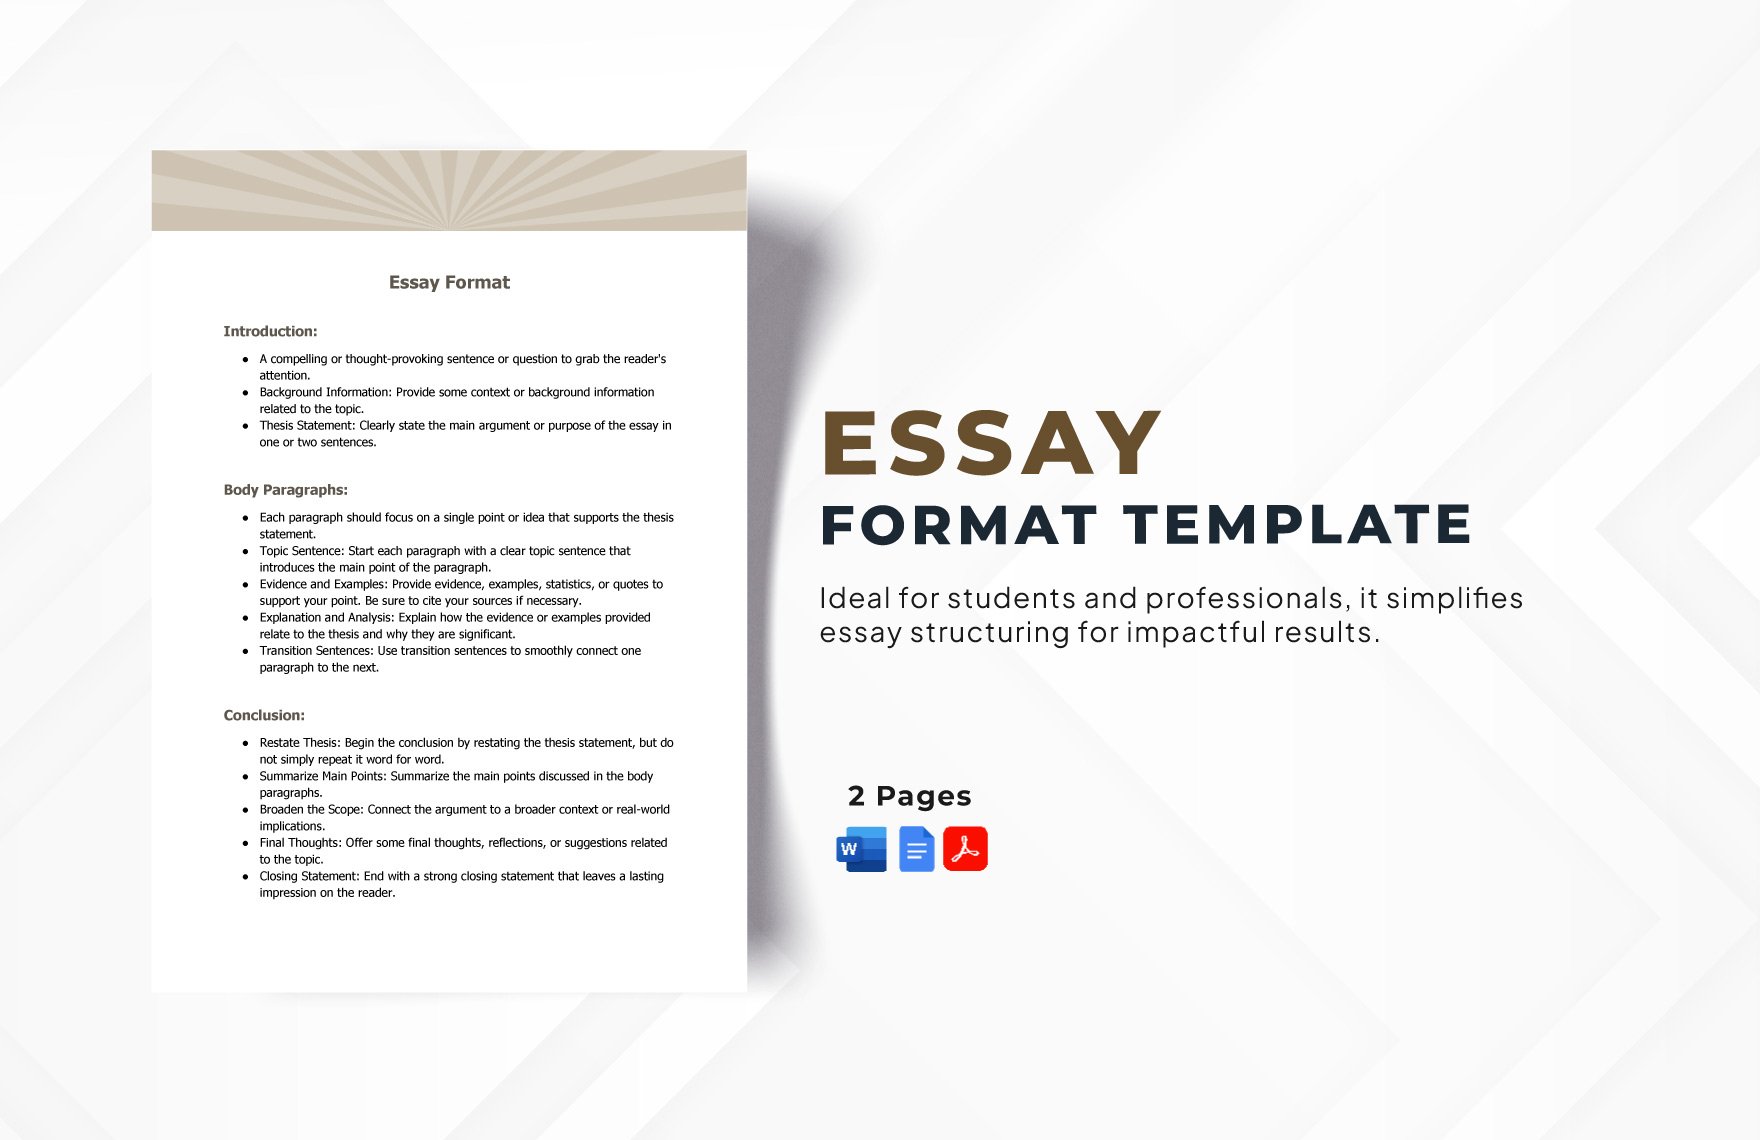 Essay Format Template